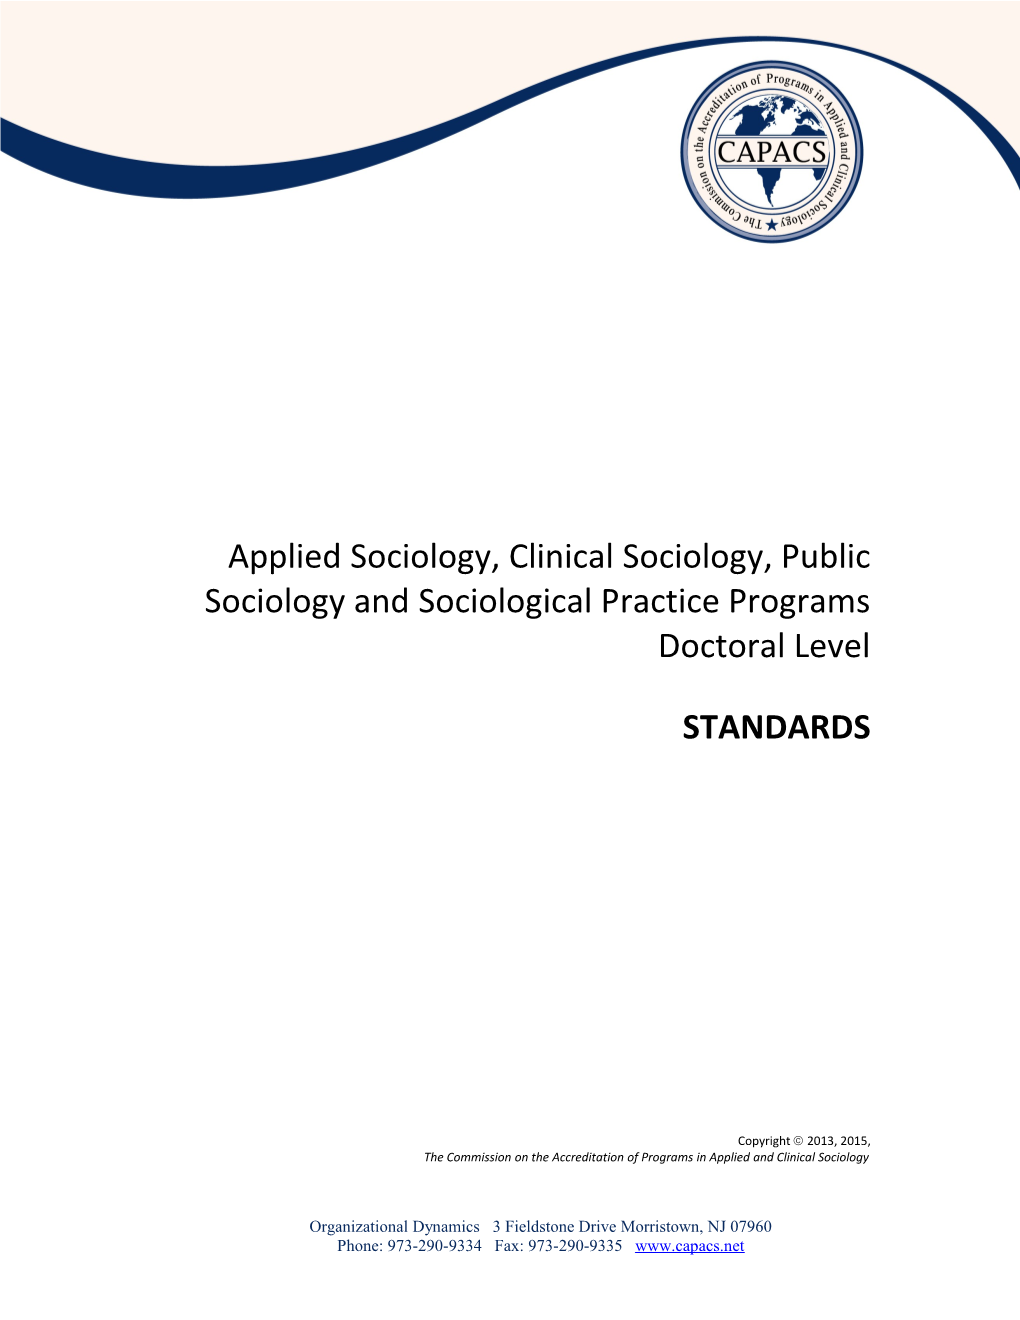 Applied Sociology, Clinical Sociology, Public Sociology and Sociological Practice Programs s1